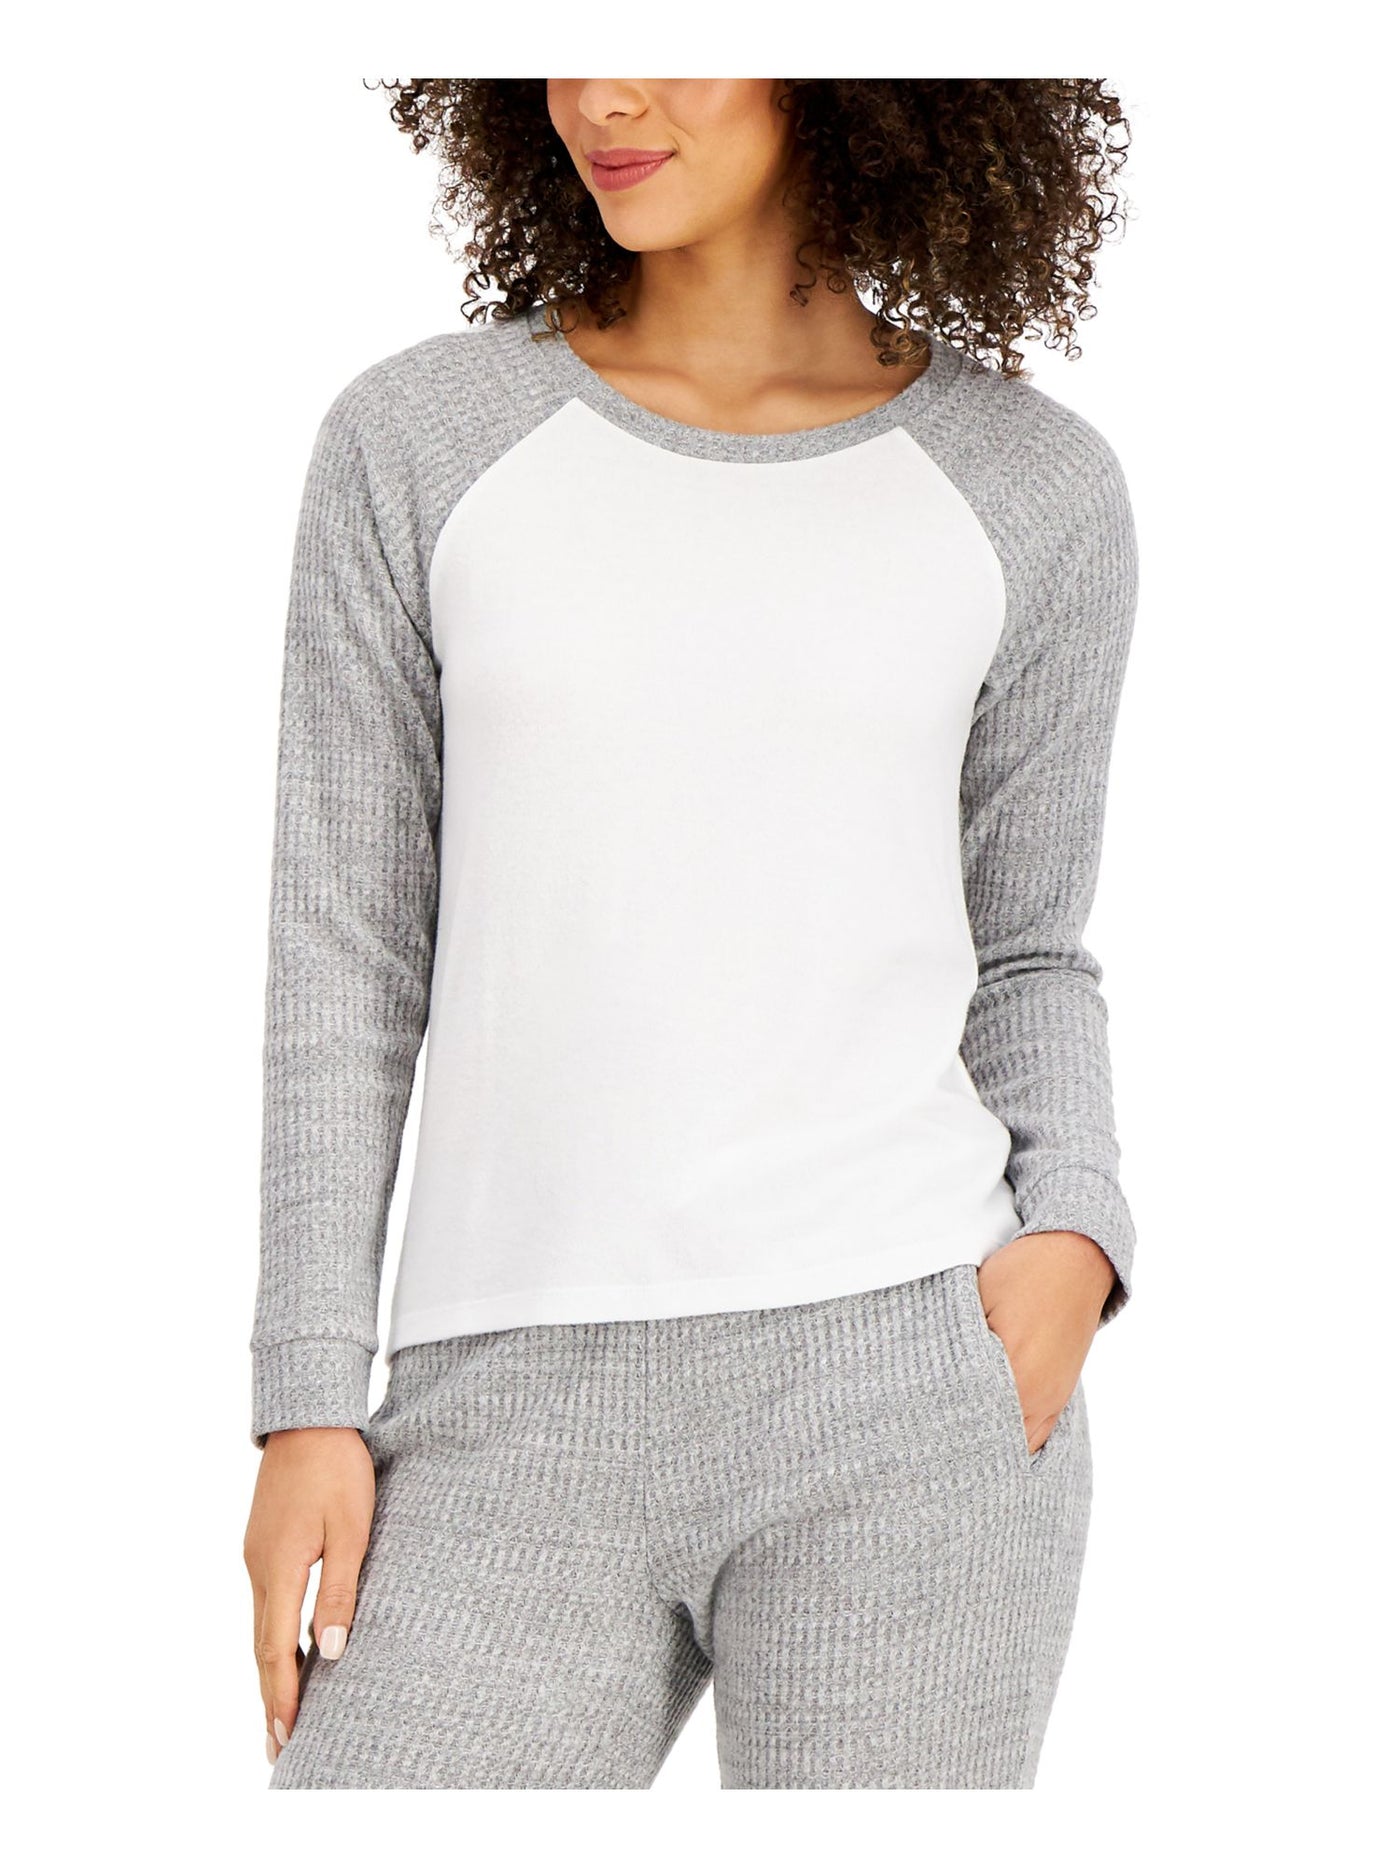 ALFANI Intimates Gray Sleep Shirt Pajama Top M